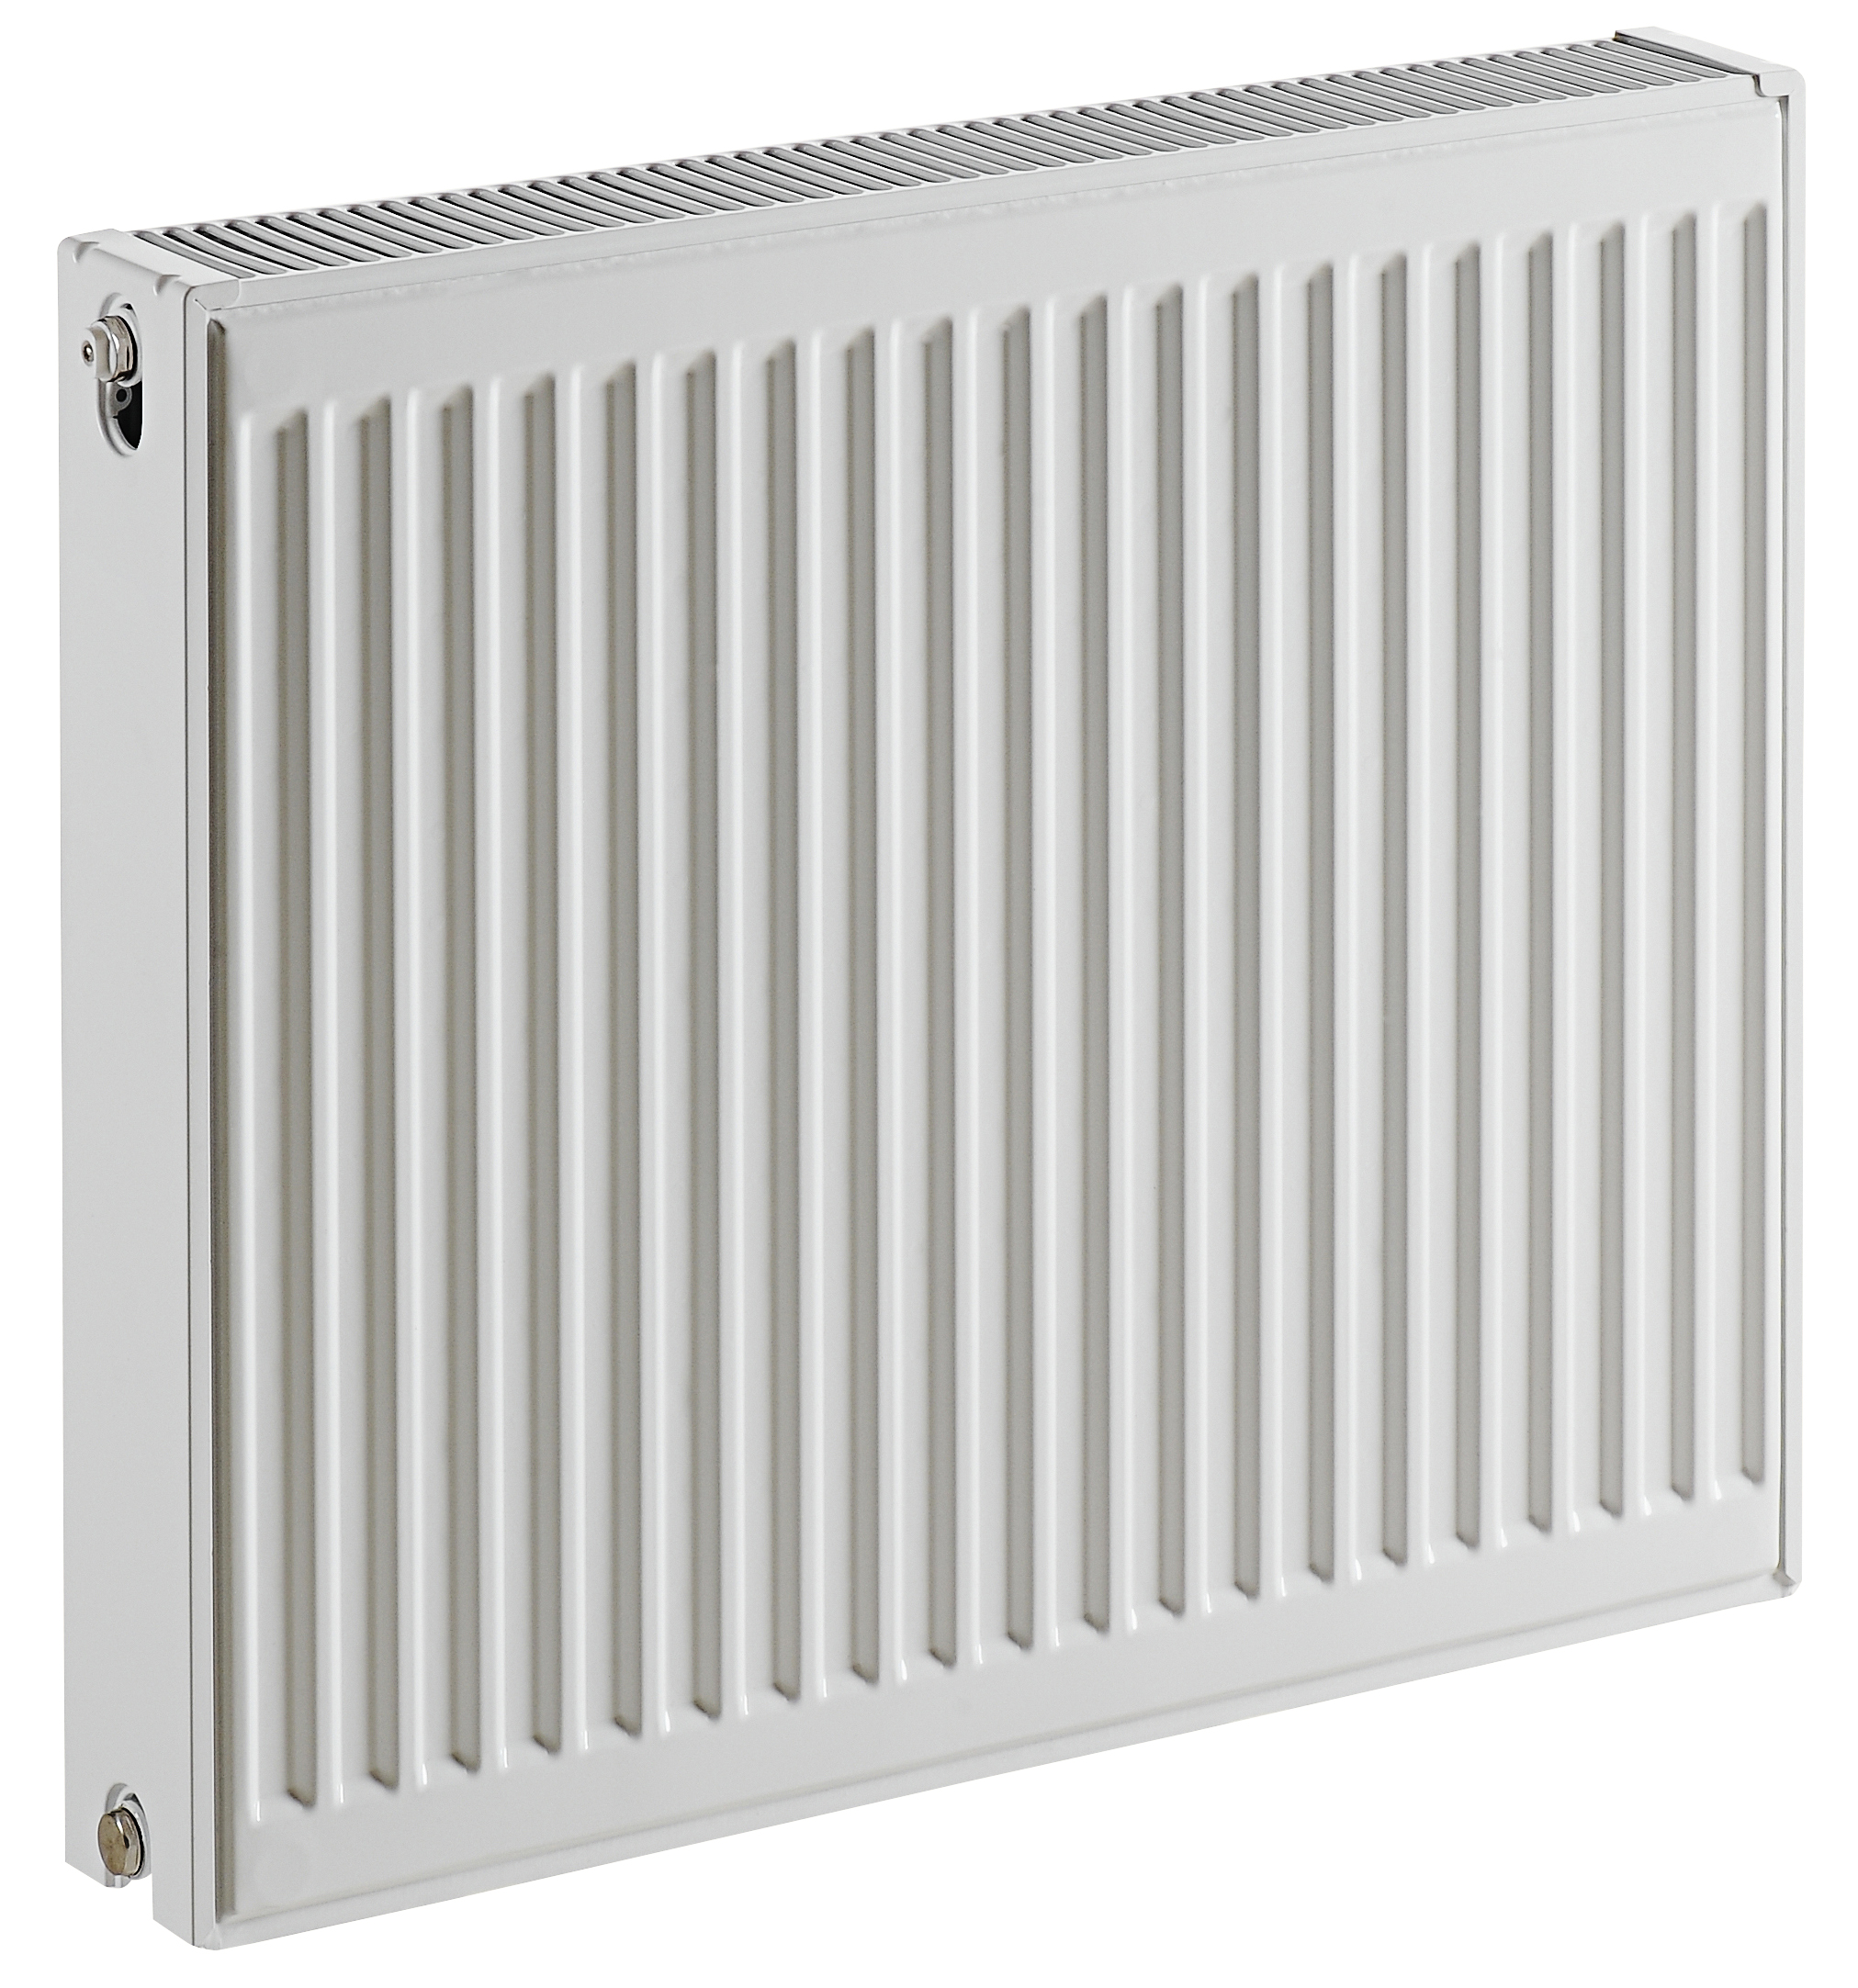 Heizrad radiator - Billig kvalitets radiator